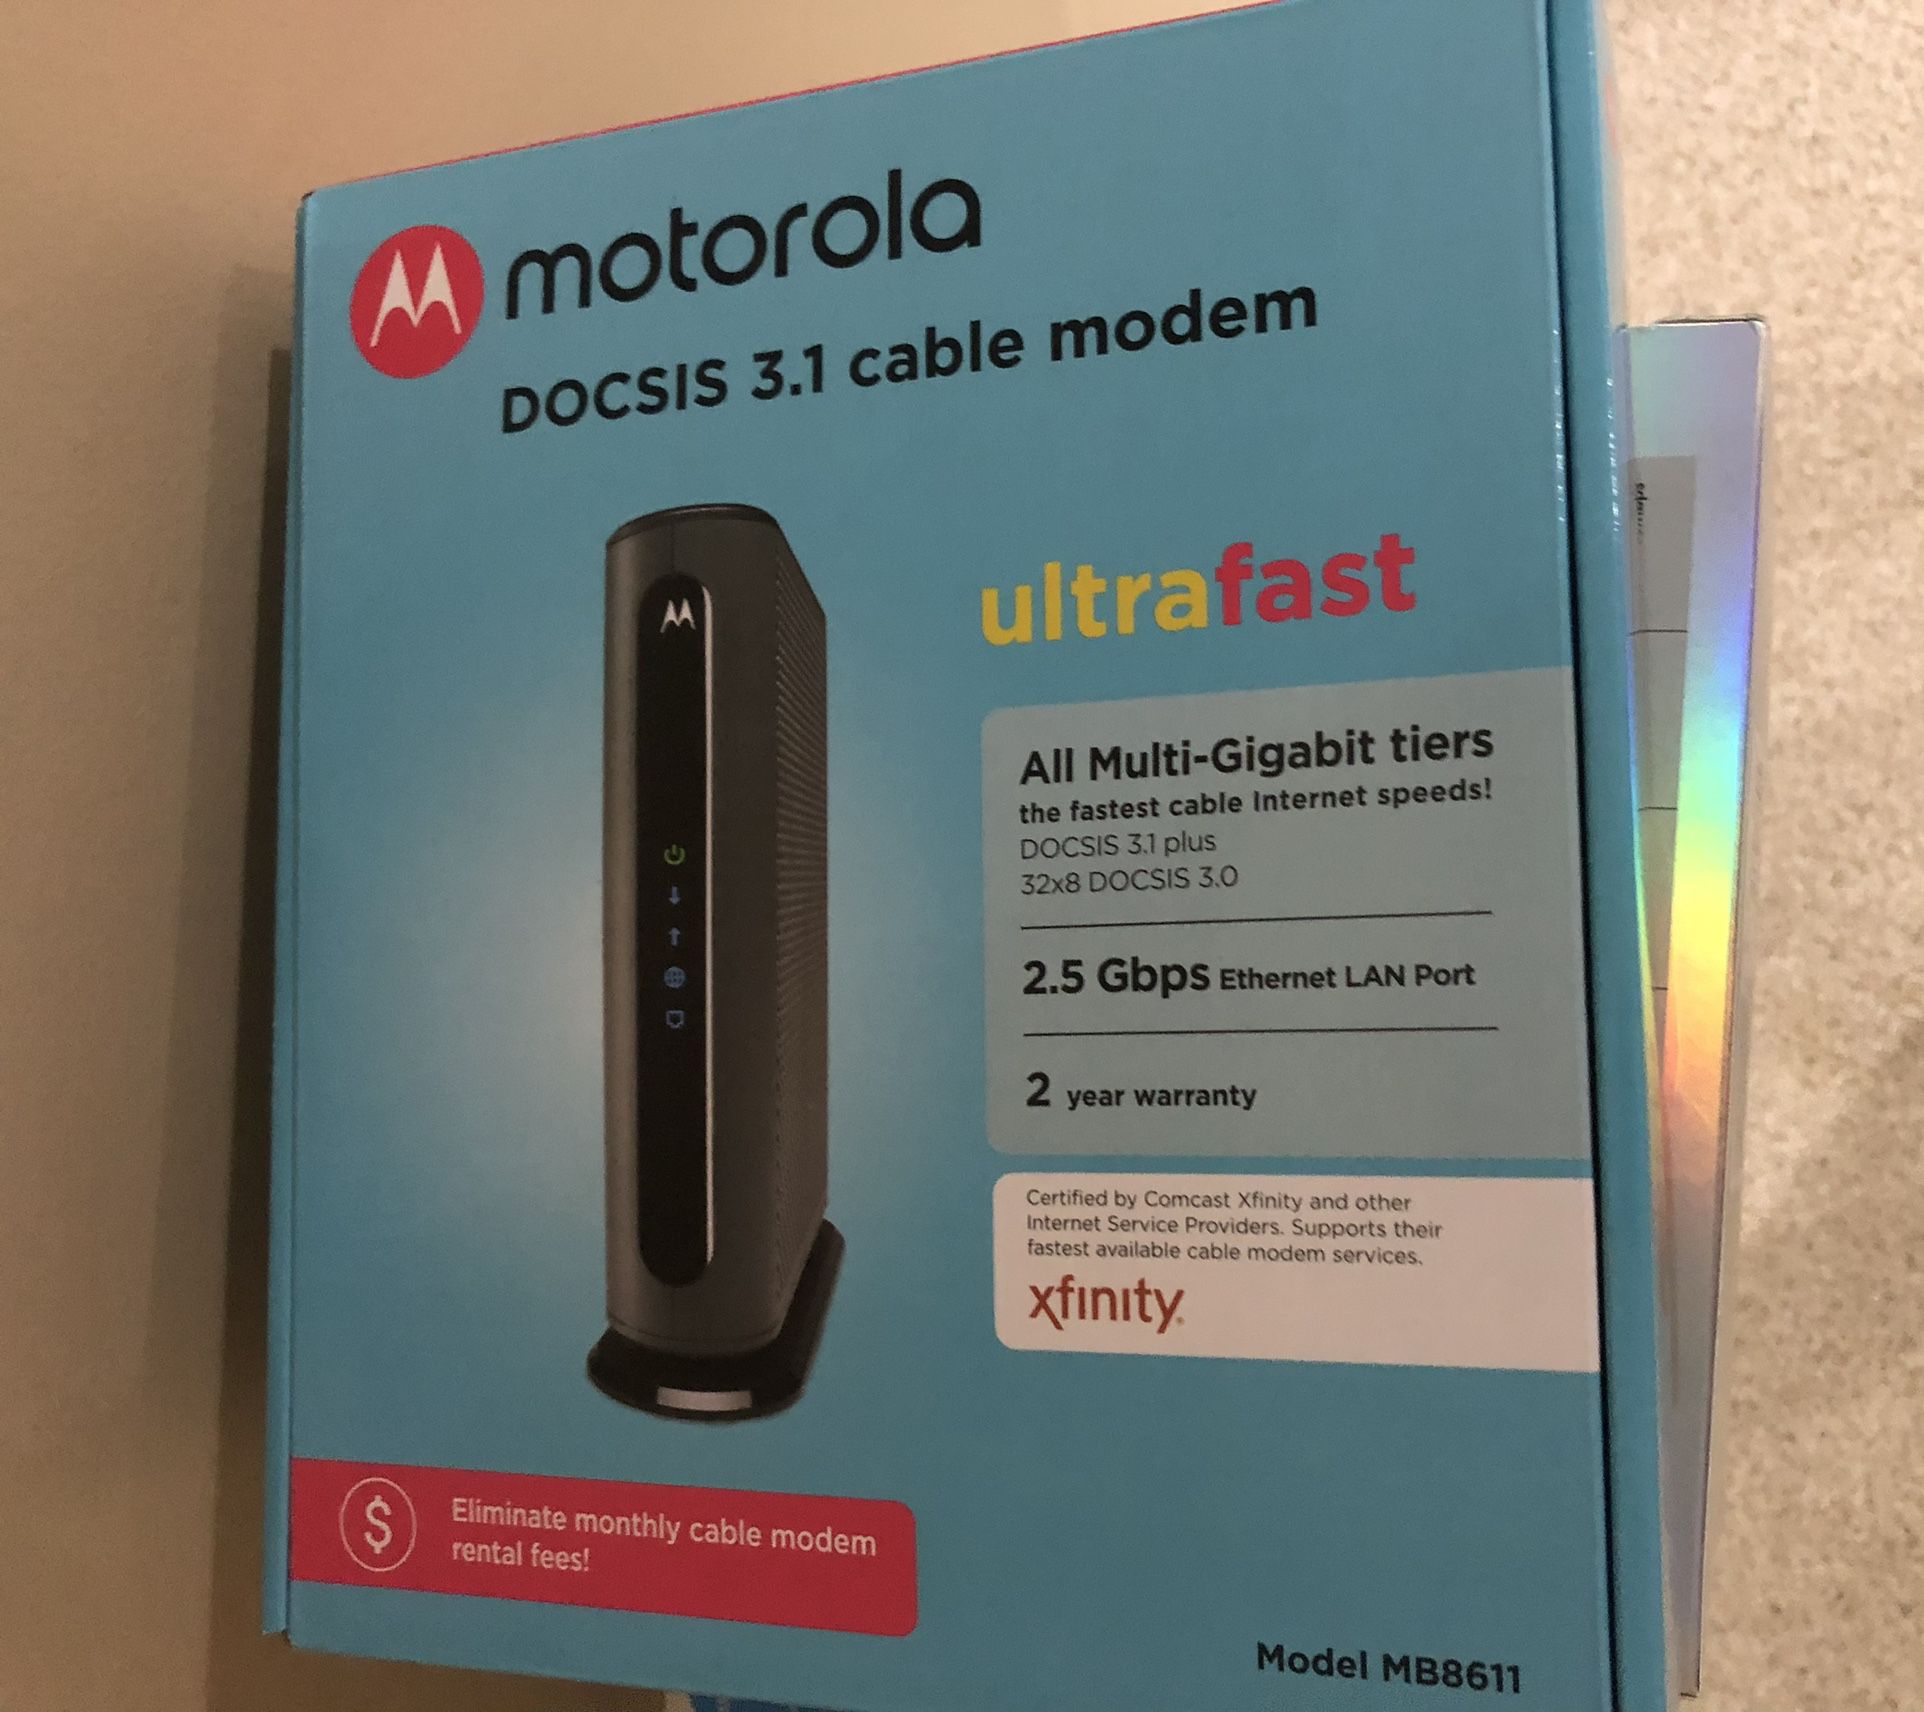 New Motorola DOCSIS 3.1 Modem